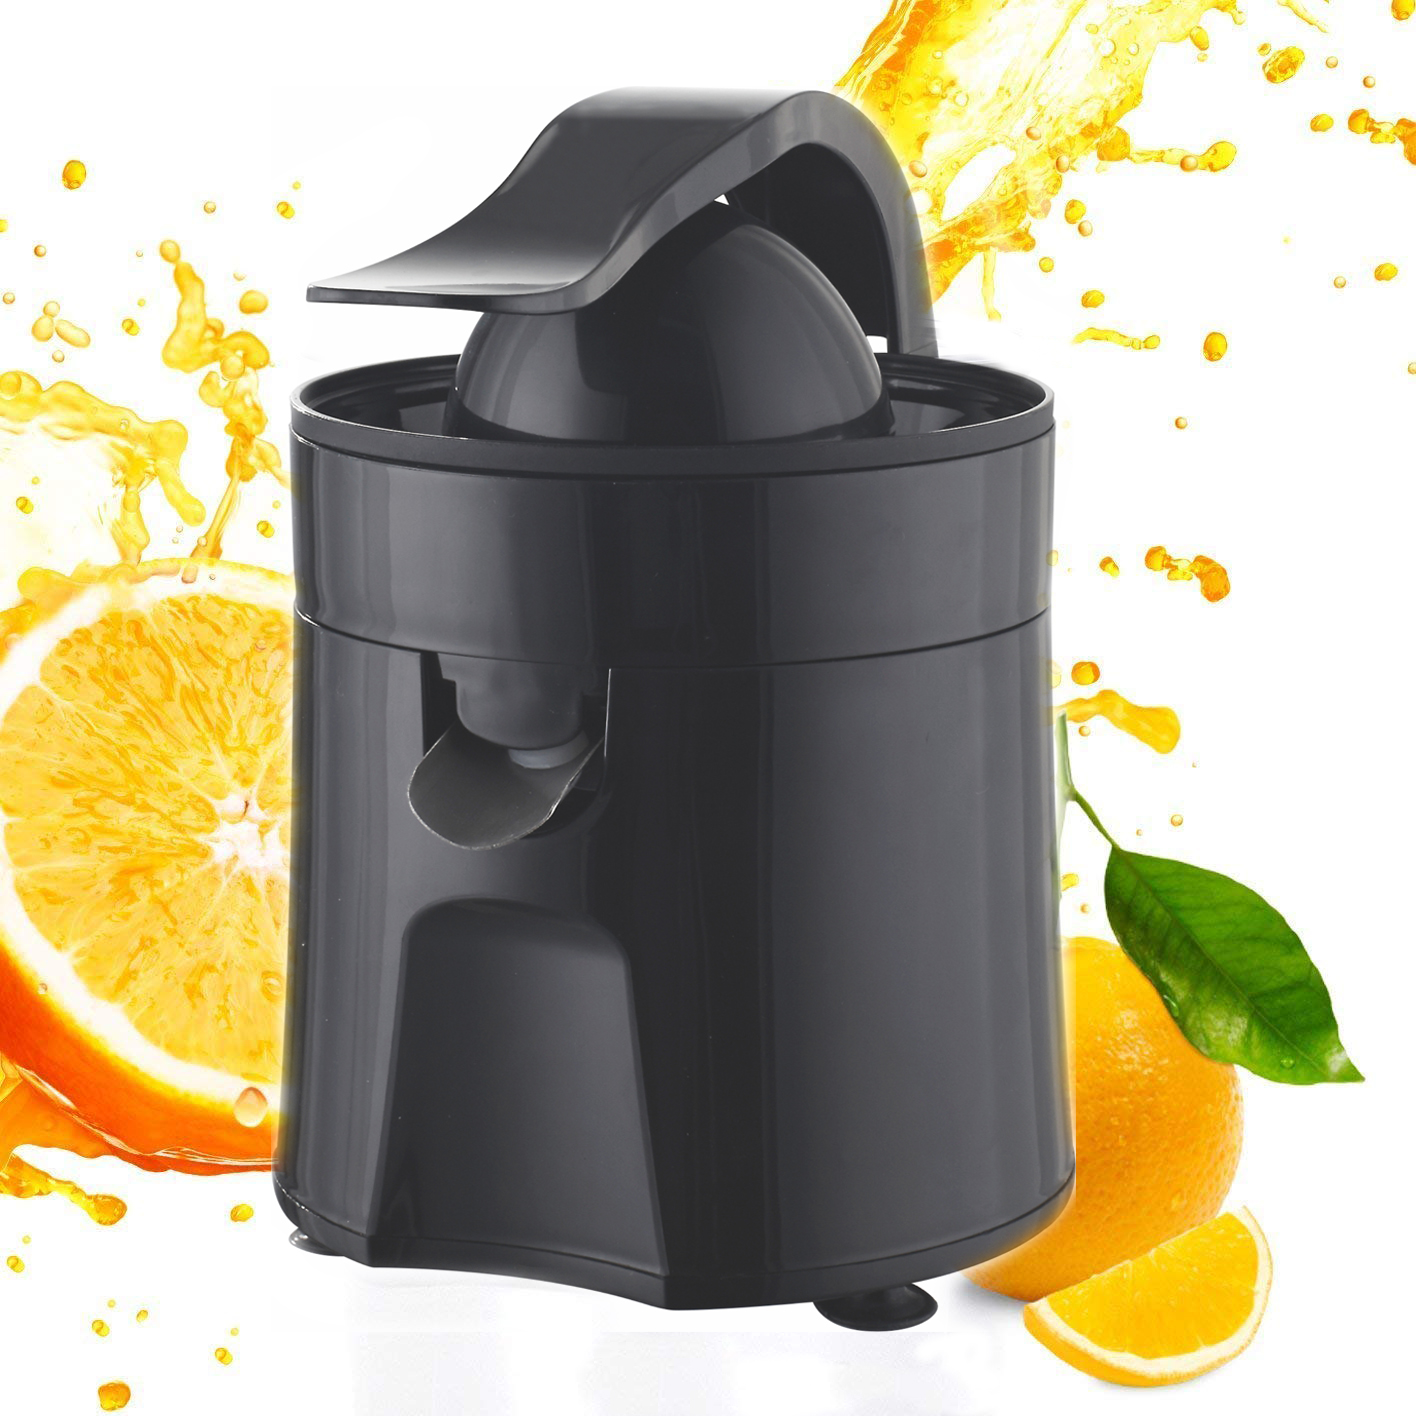 Home -Appliances Orange Citrus Juicer Machine Press Squeezer